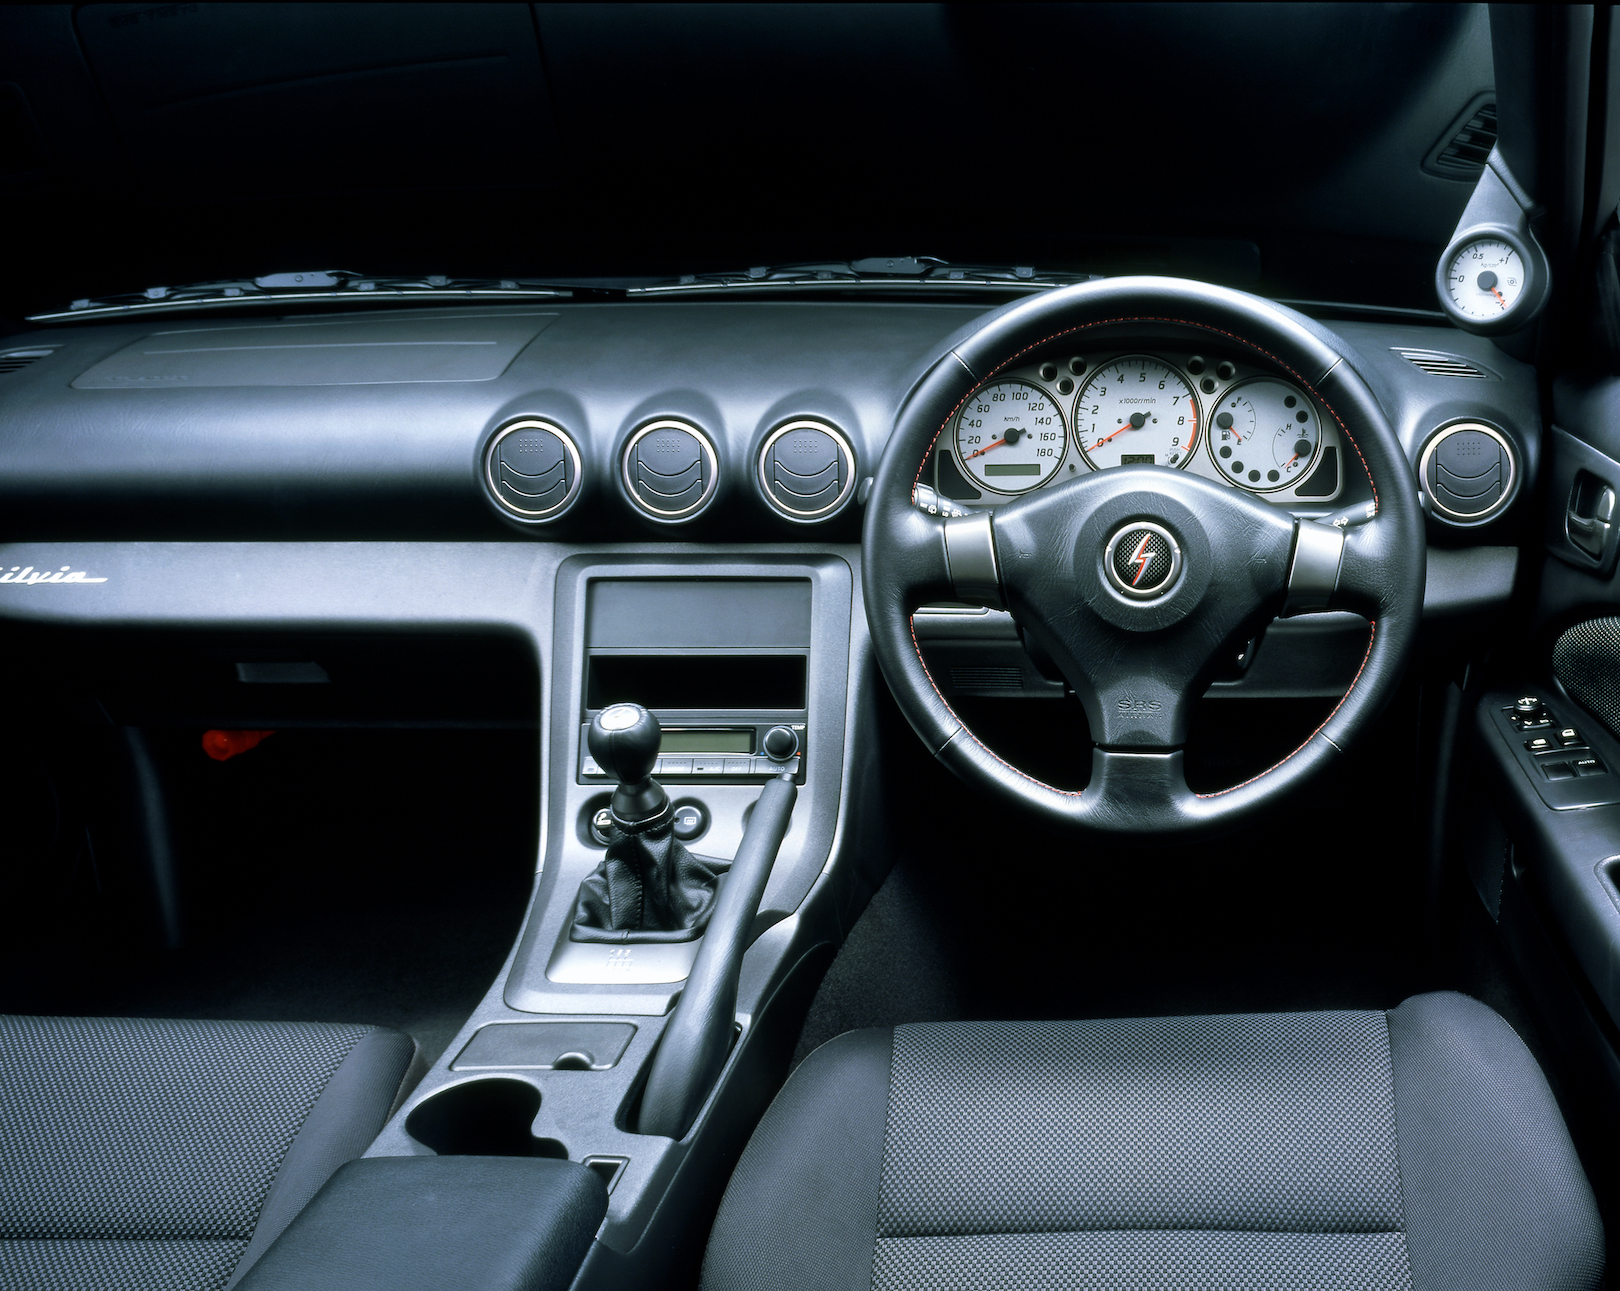 Cockpit of the 1999 Nissan Silvia